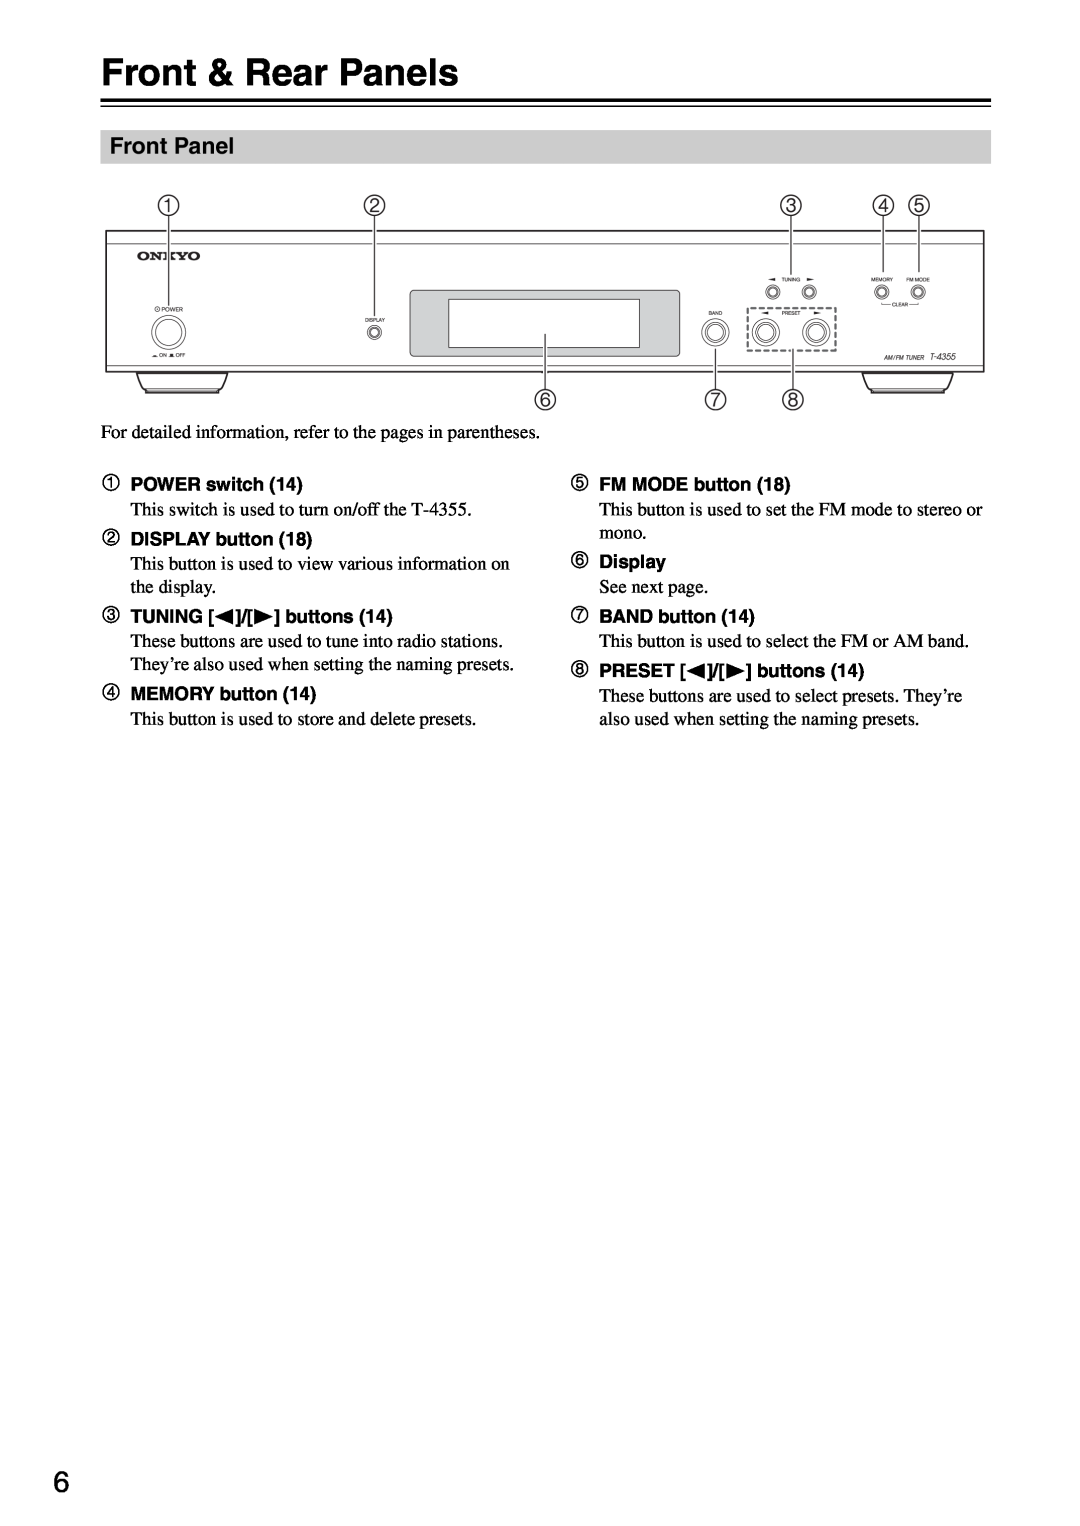 Onkyo T-4355 instruction manual Front & Rear Panels,    